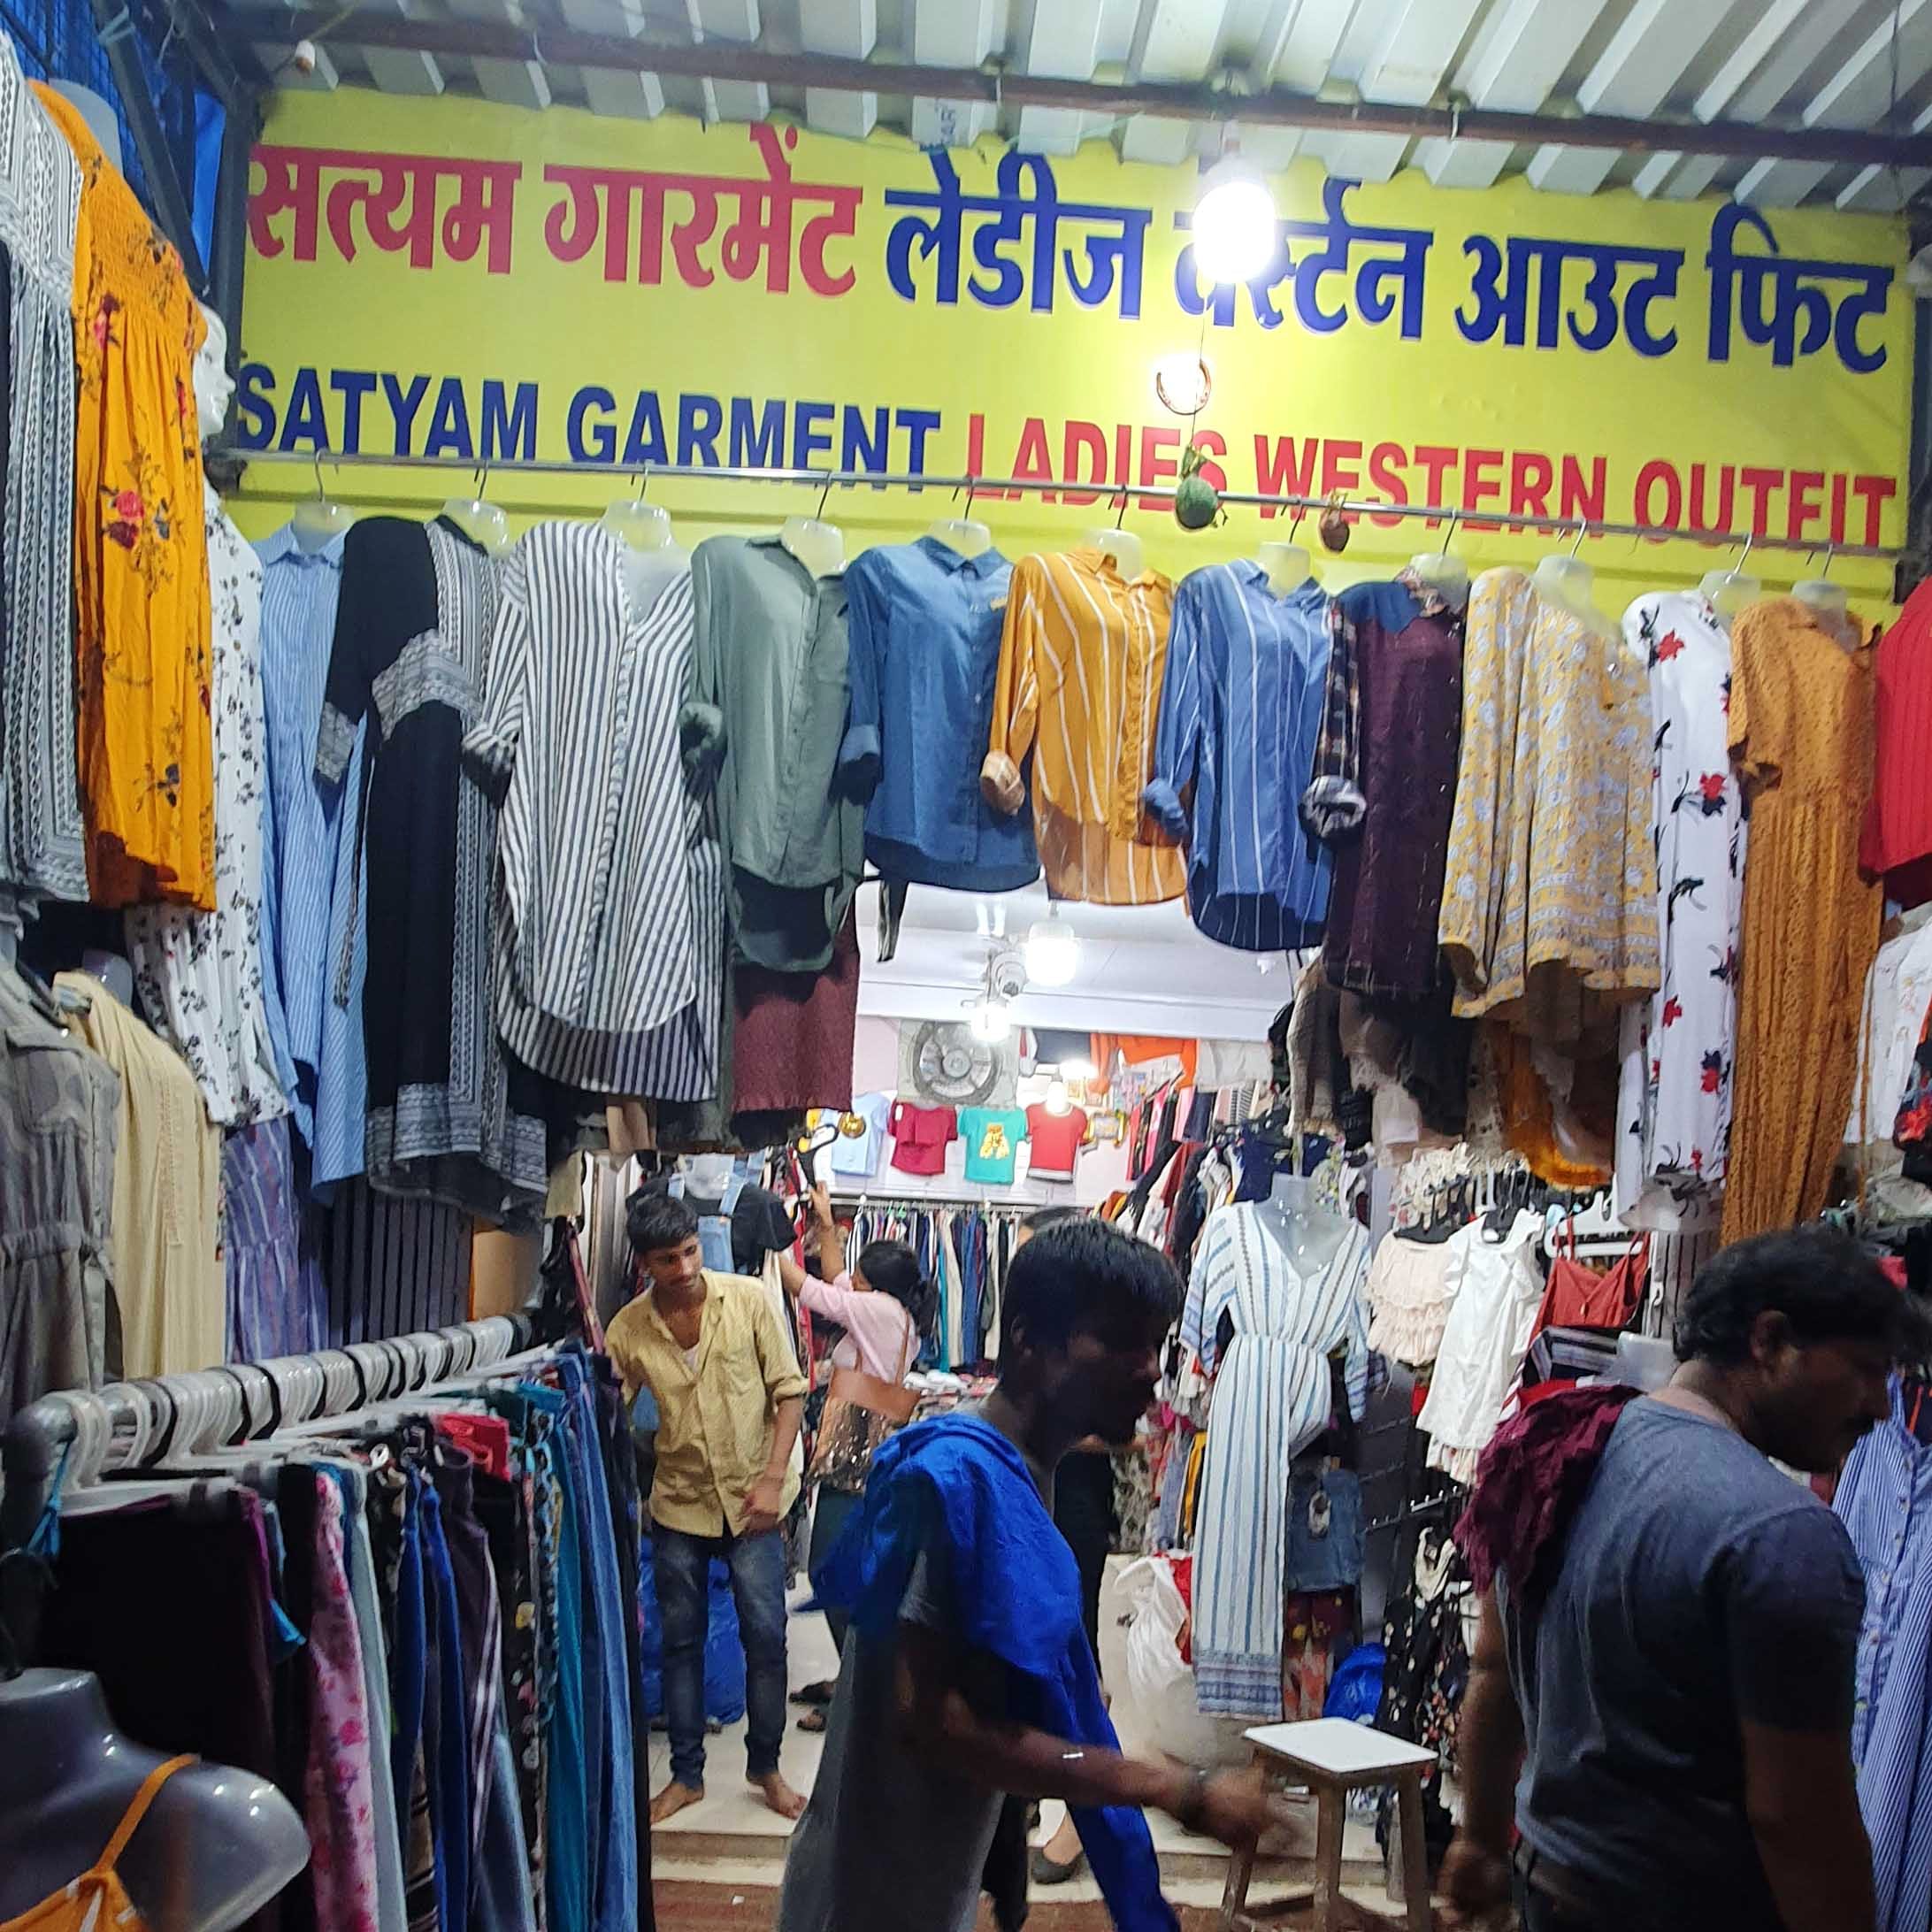 Selling,Bazaar,Retail,Public space,Marketplace,Market,Outlet store,Shopping,Human settlement,Textile